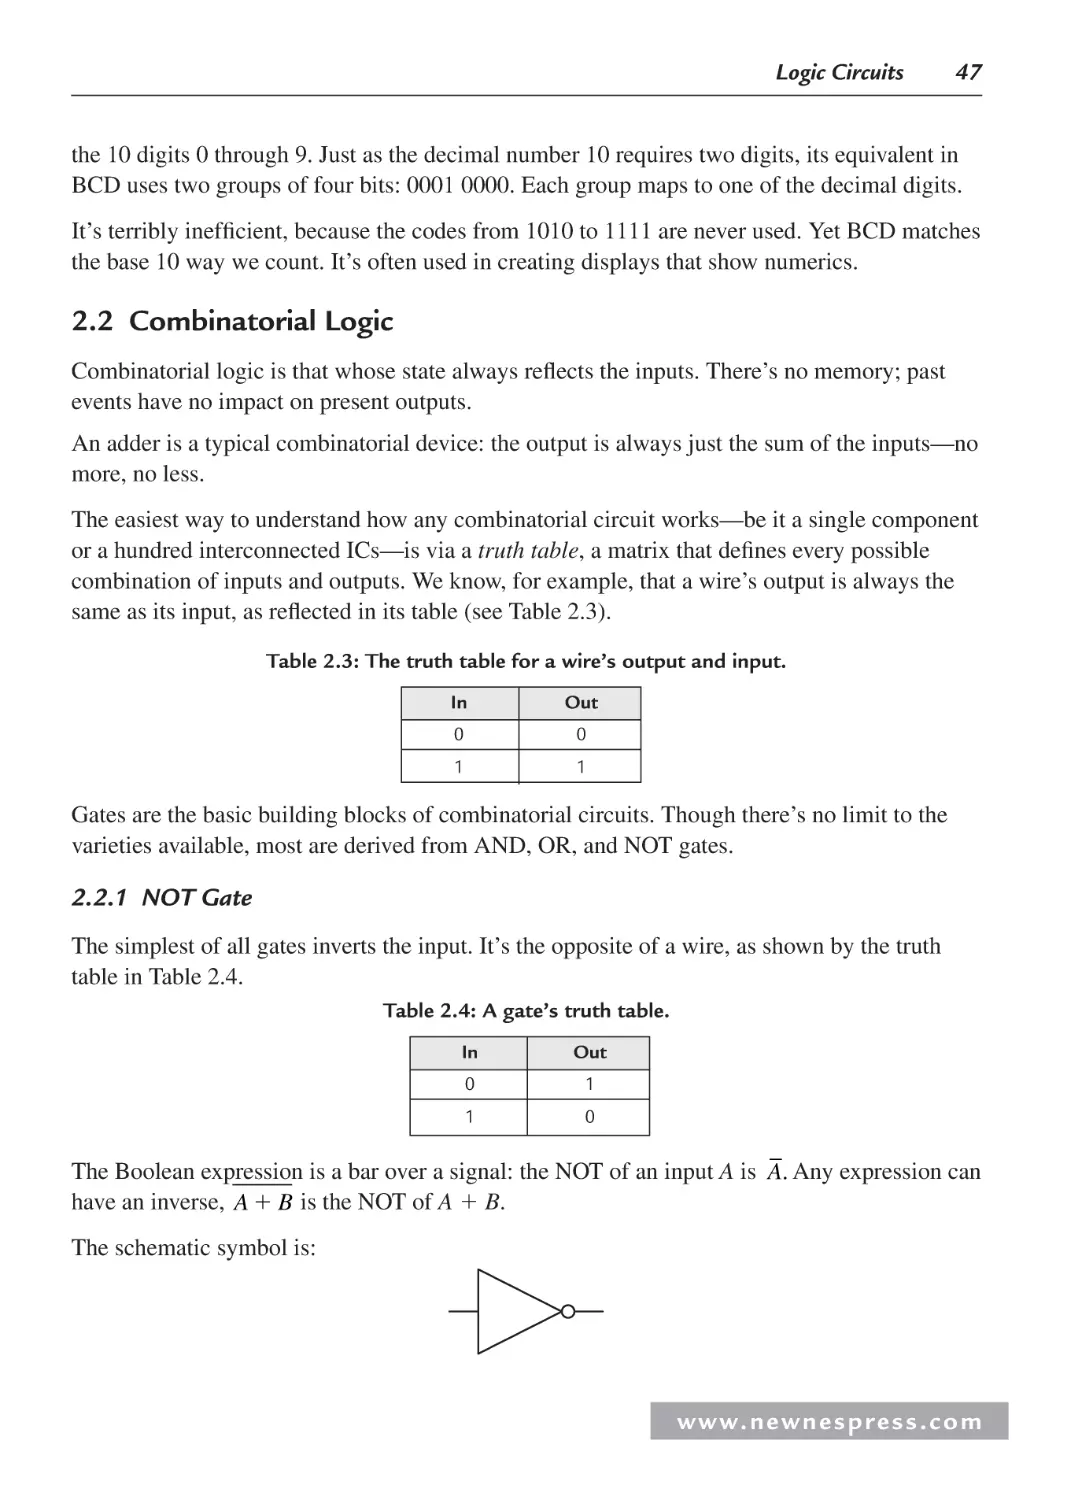 2.2 Combinatorial Logic